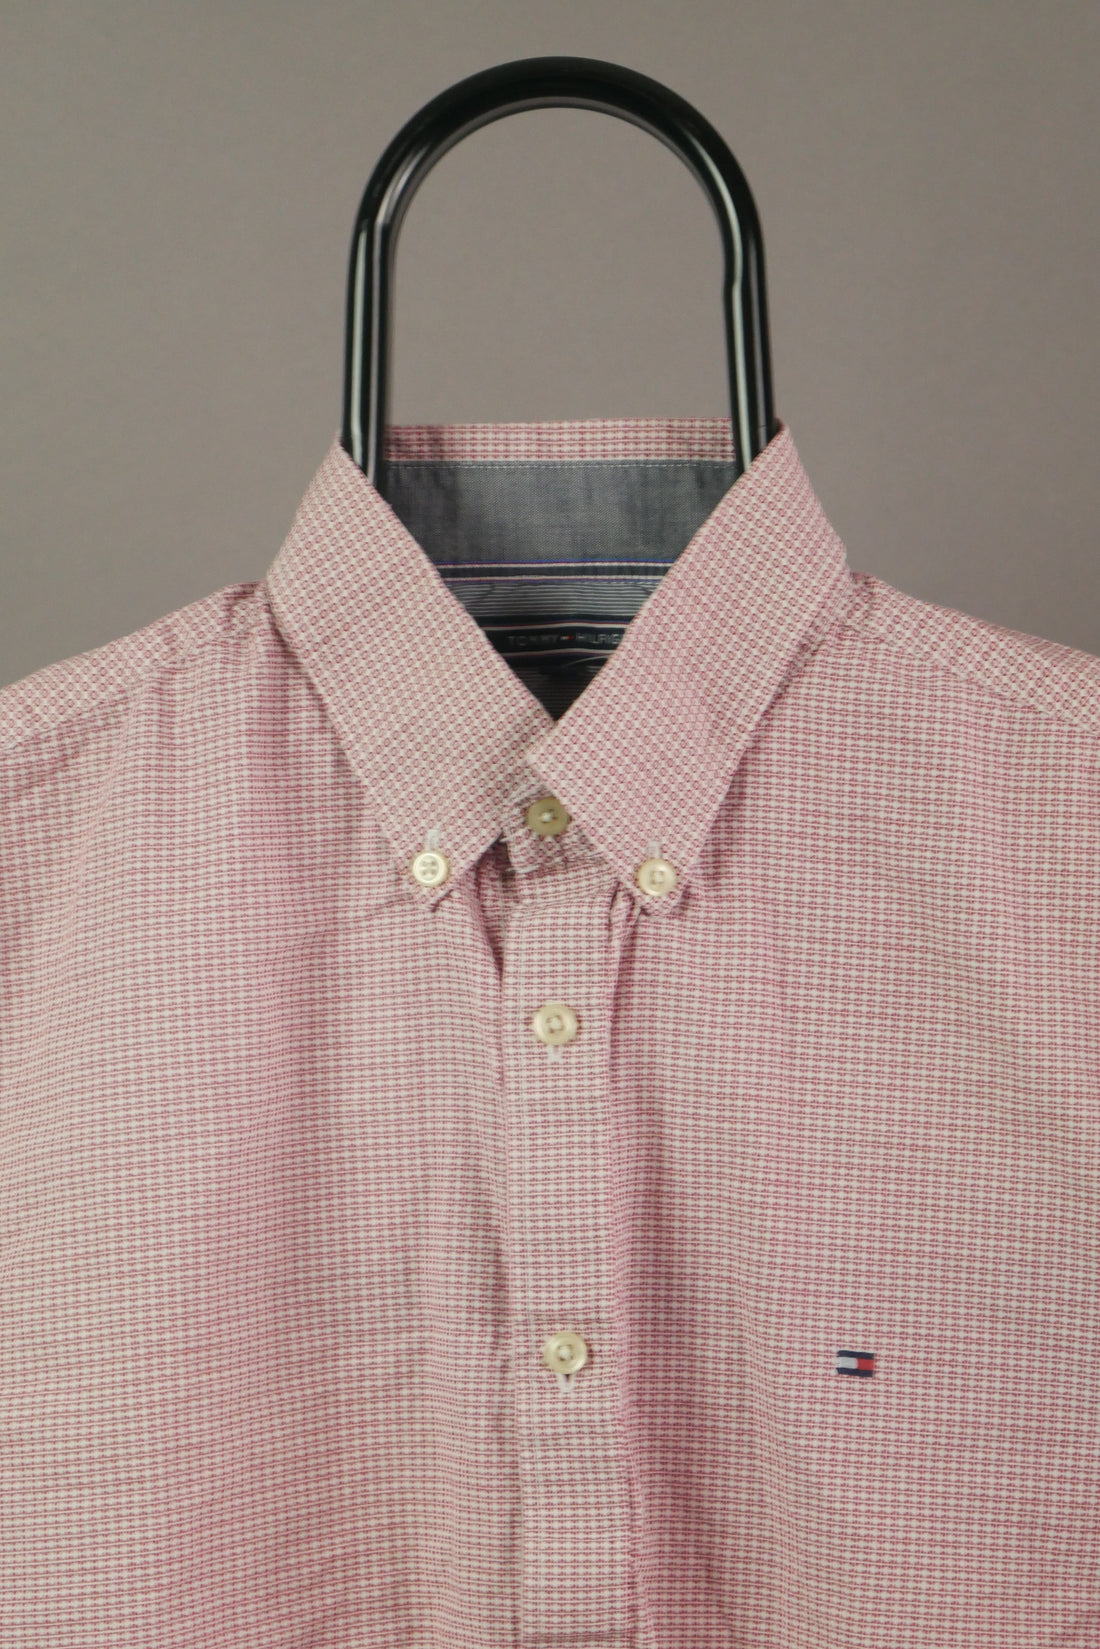 The Tommy Hilfiger Geometric Print Long Sleeve Shirt (L)